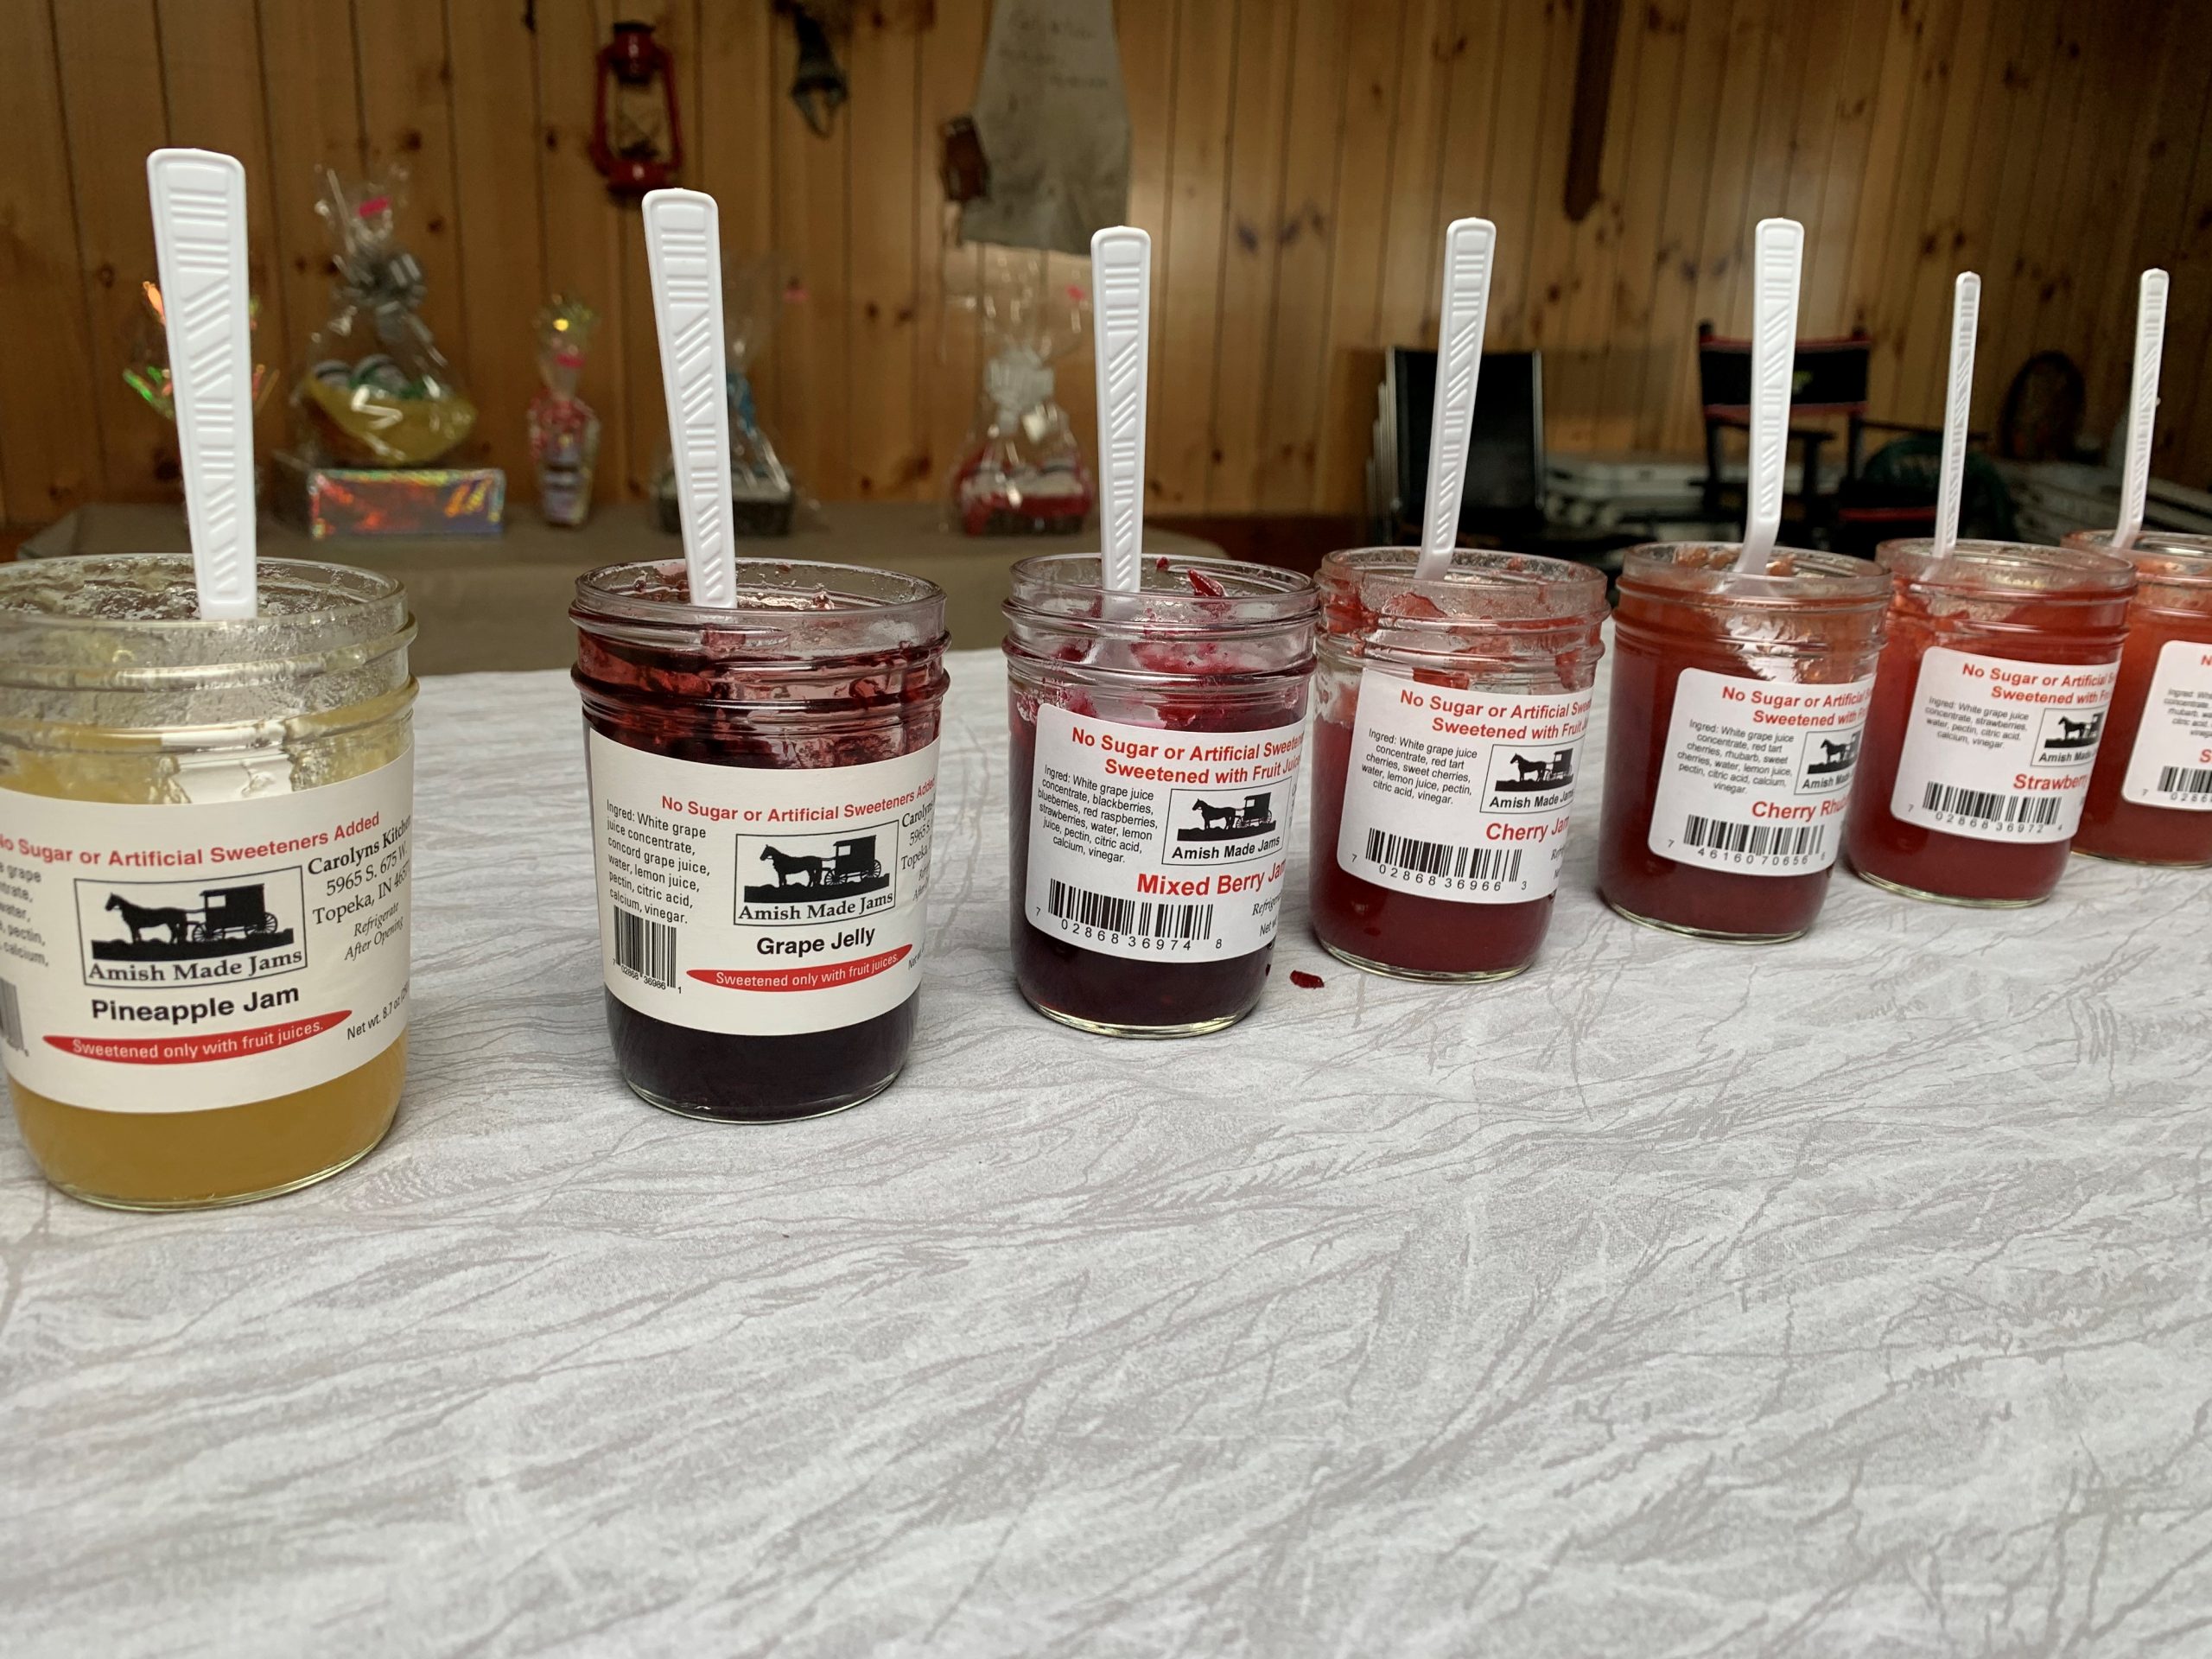 Amish Made jams and jellies